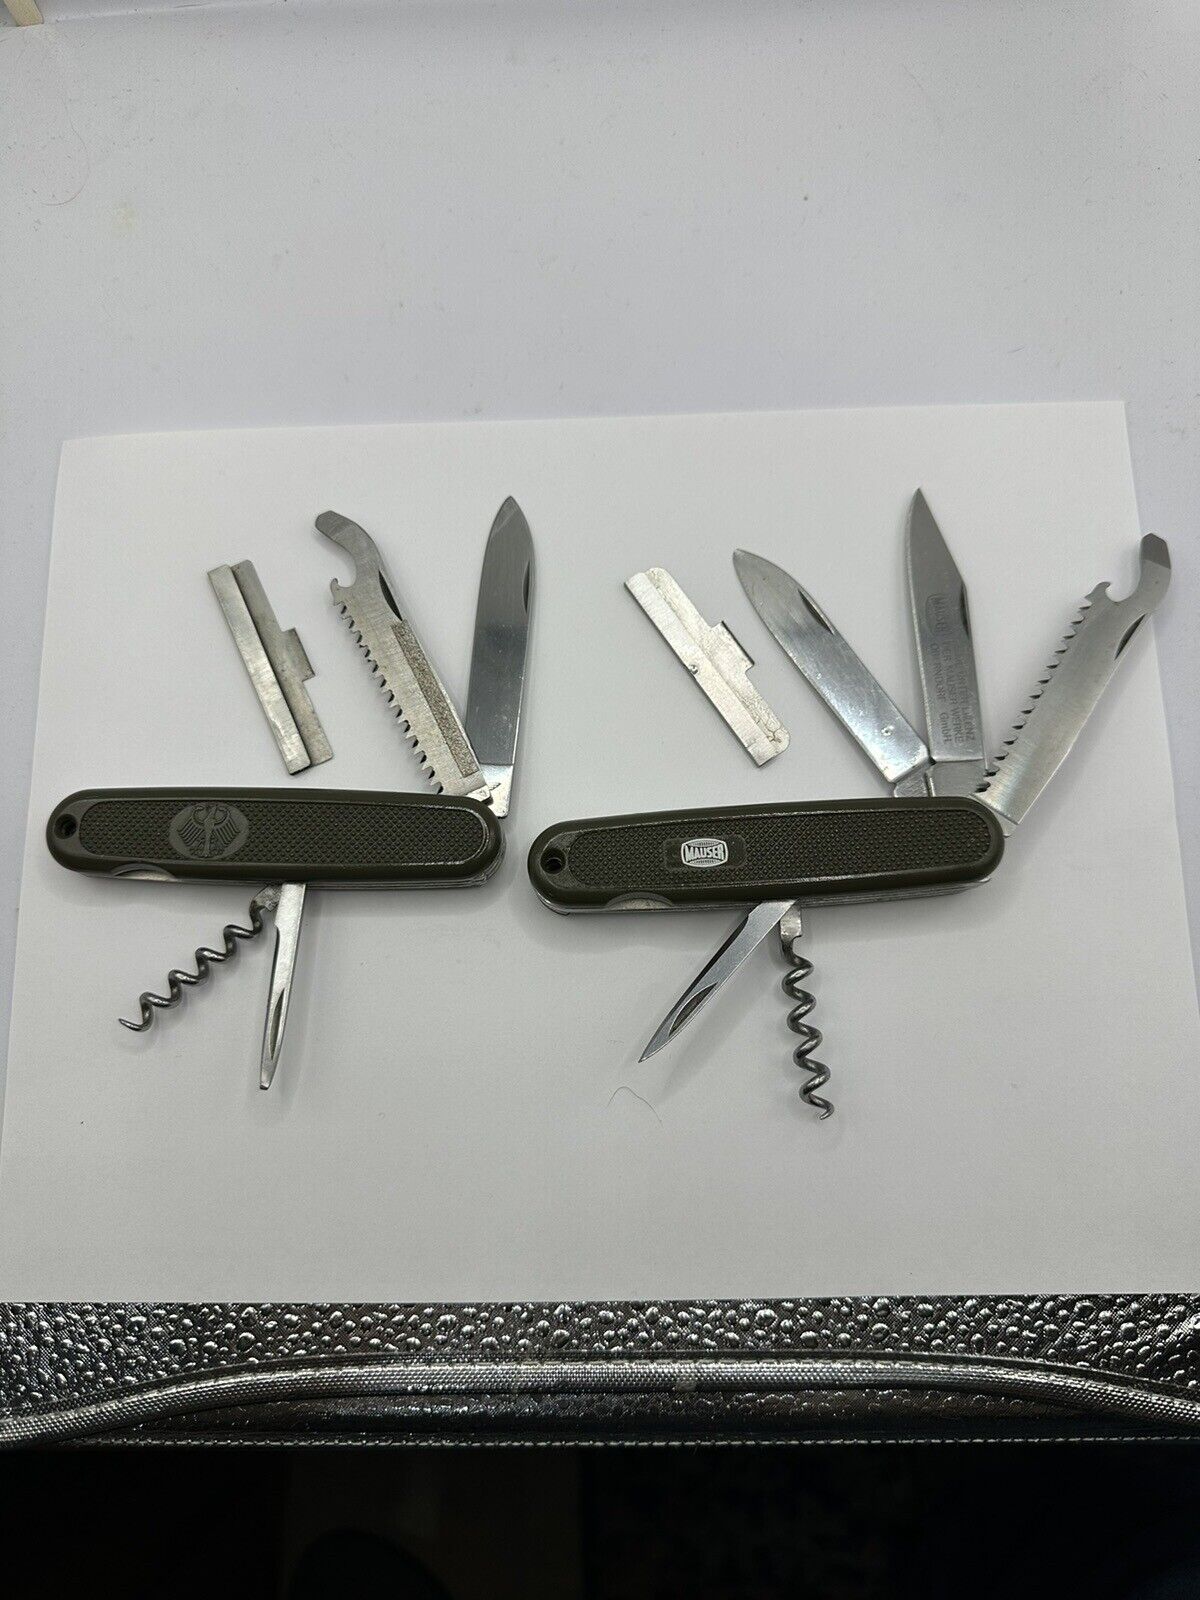 VICTORINOX Switzerland Model Mauser Swiss Army Knife And Adler German Army Knife